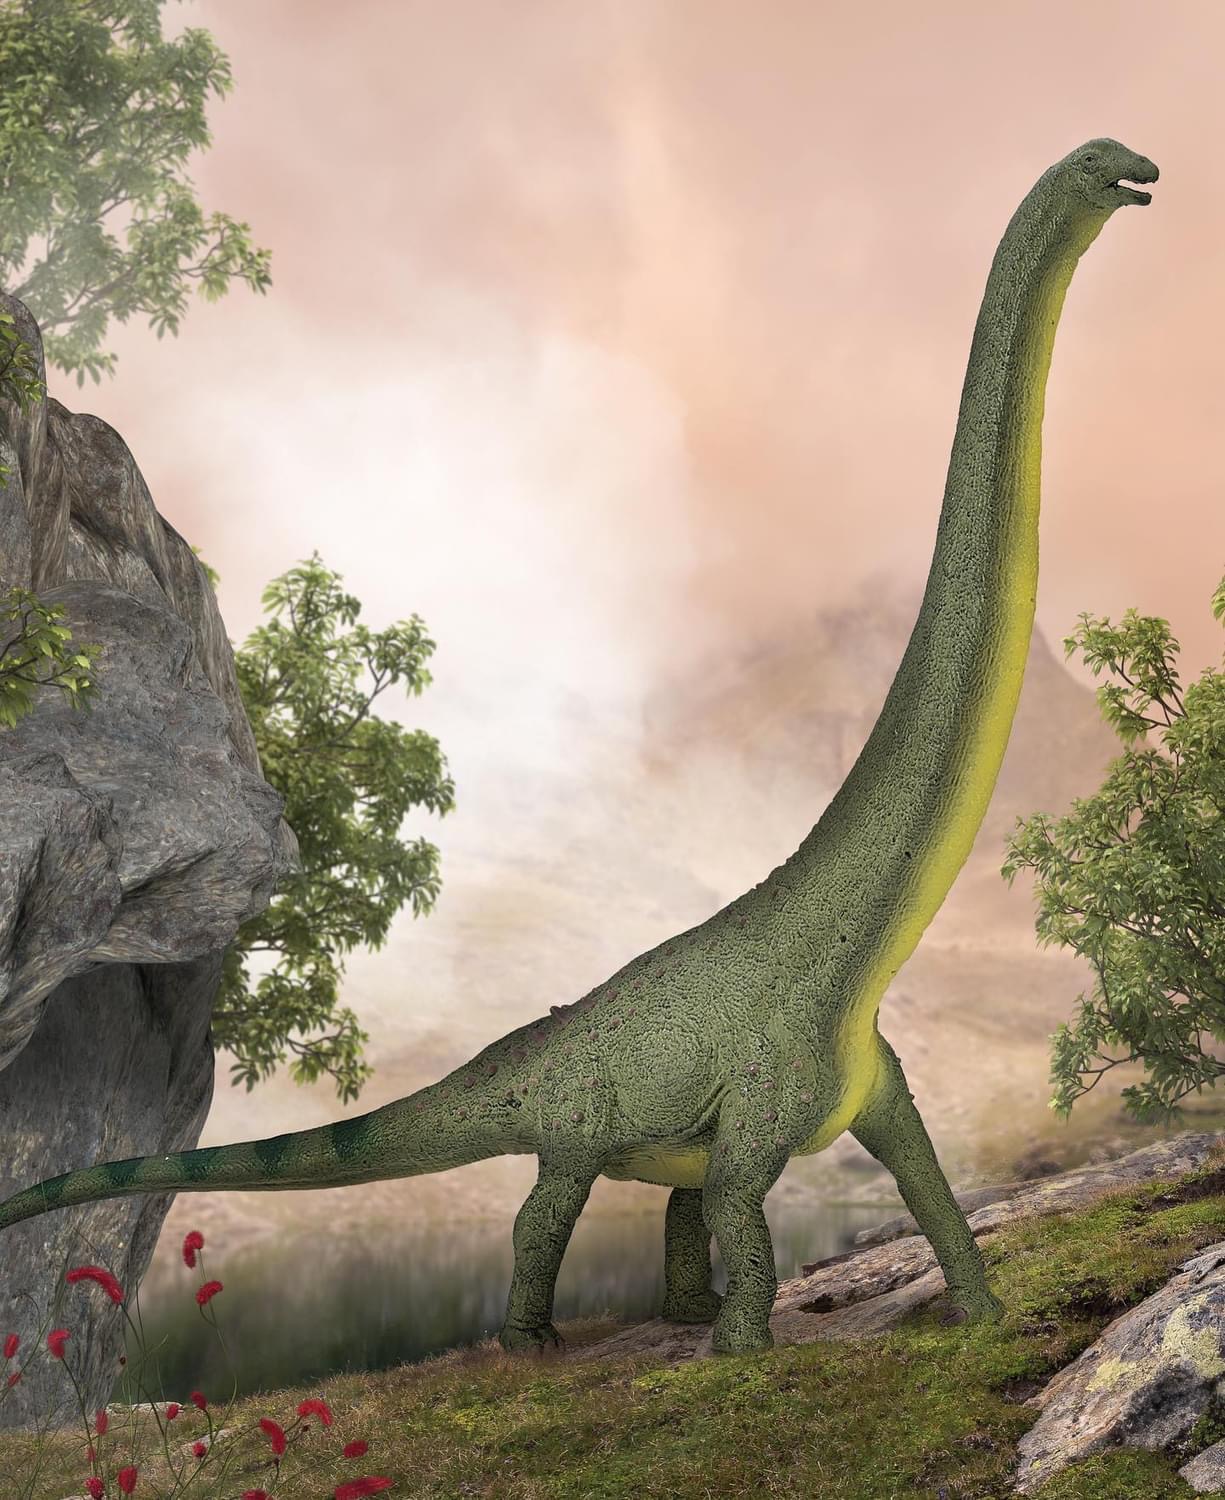 New Roadrunner Dinosaur Found in China